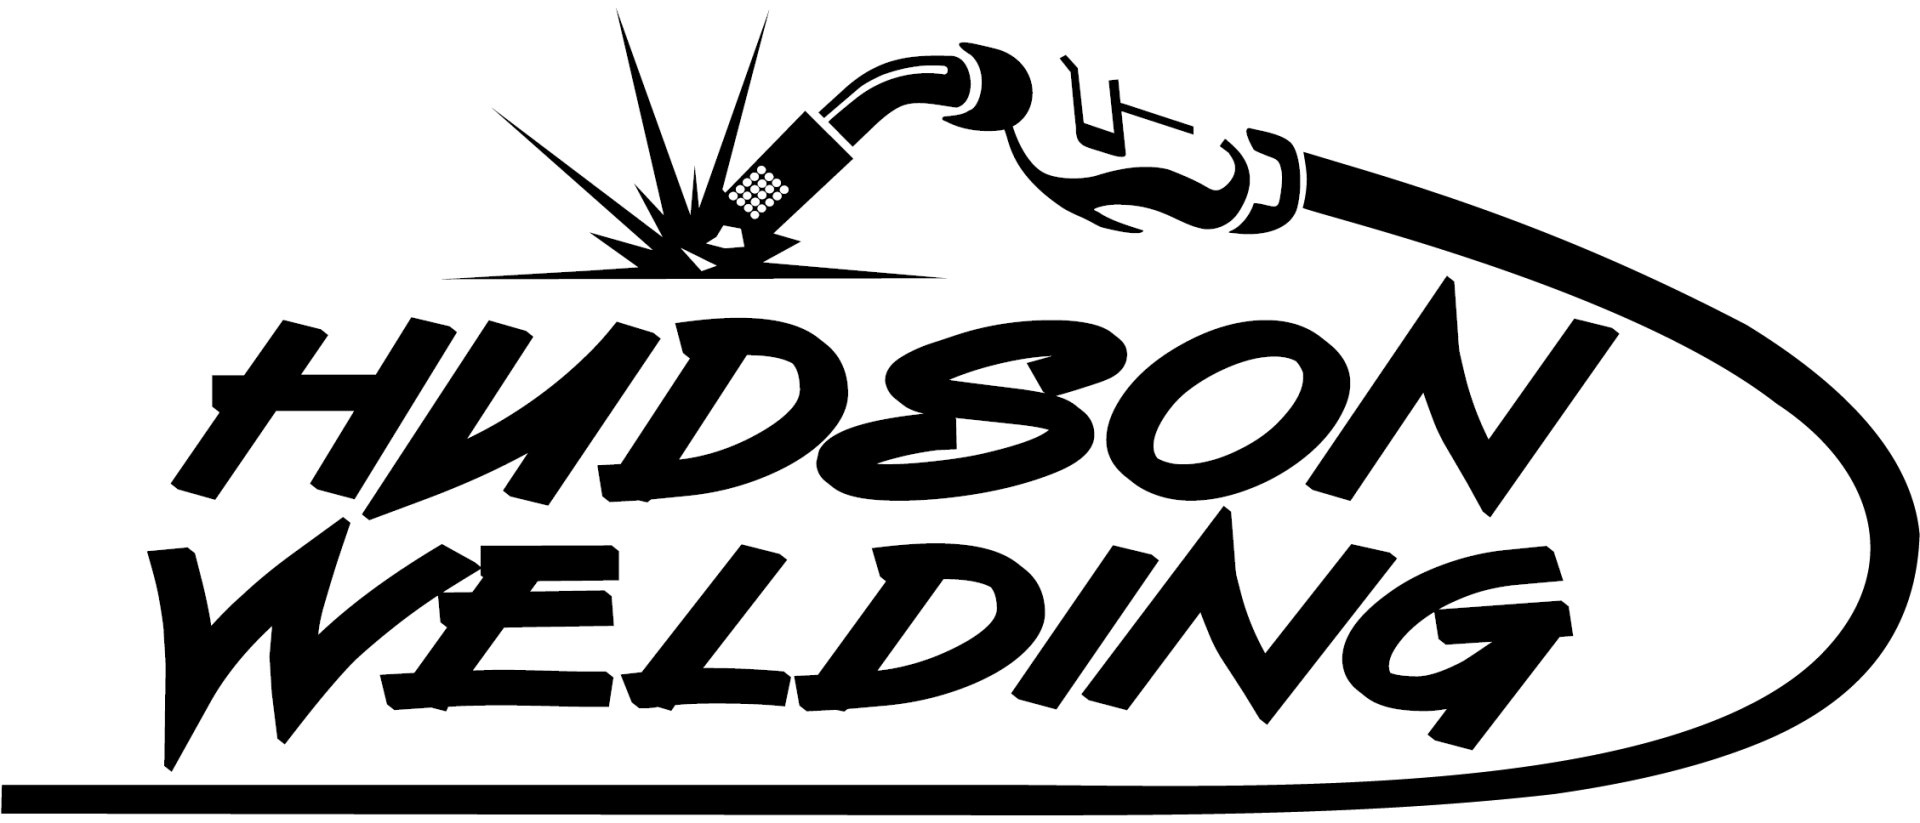 Hudson Welding: Welding and Fabrication Specialists in North Queensland